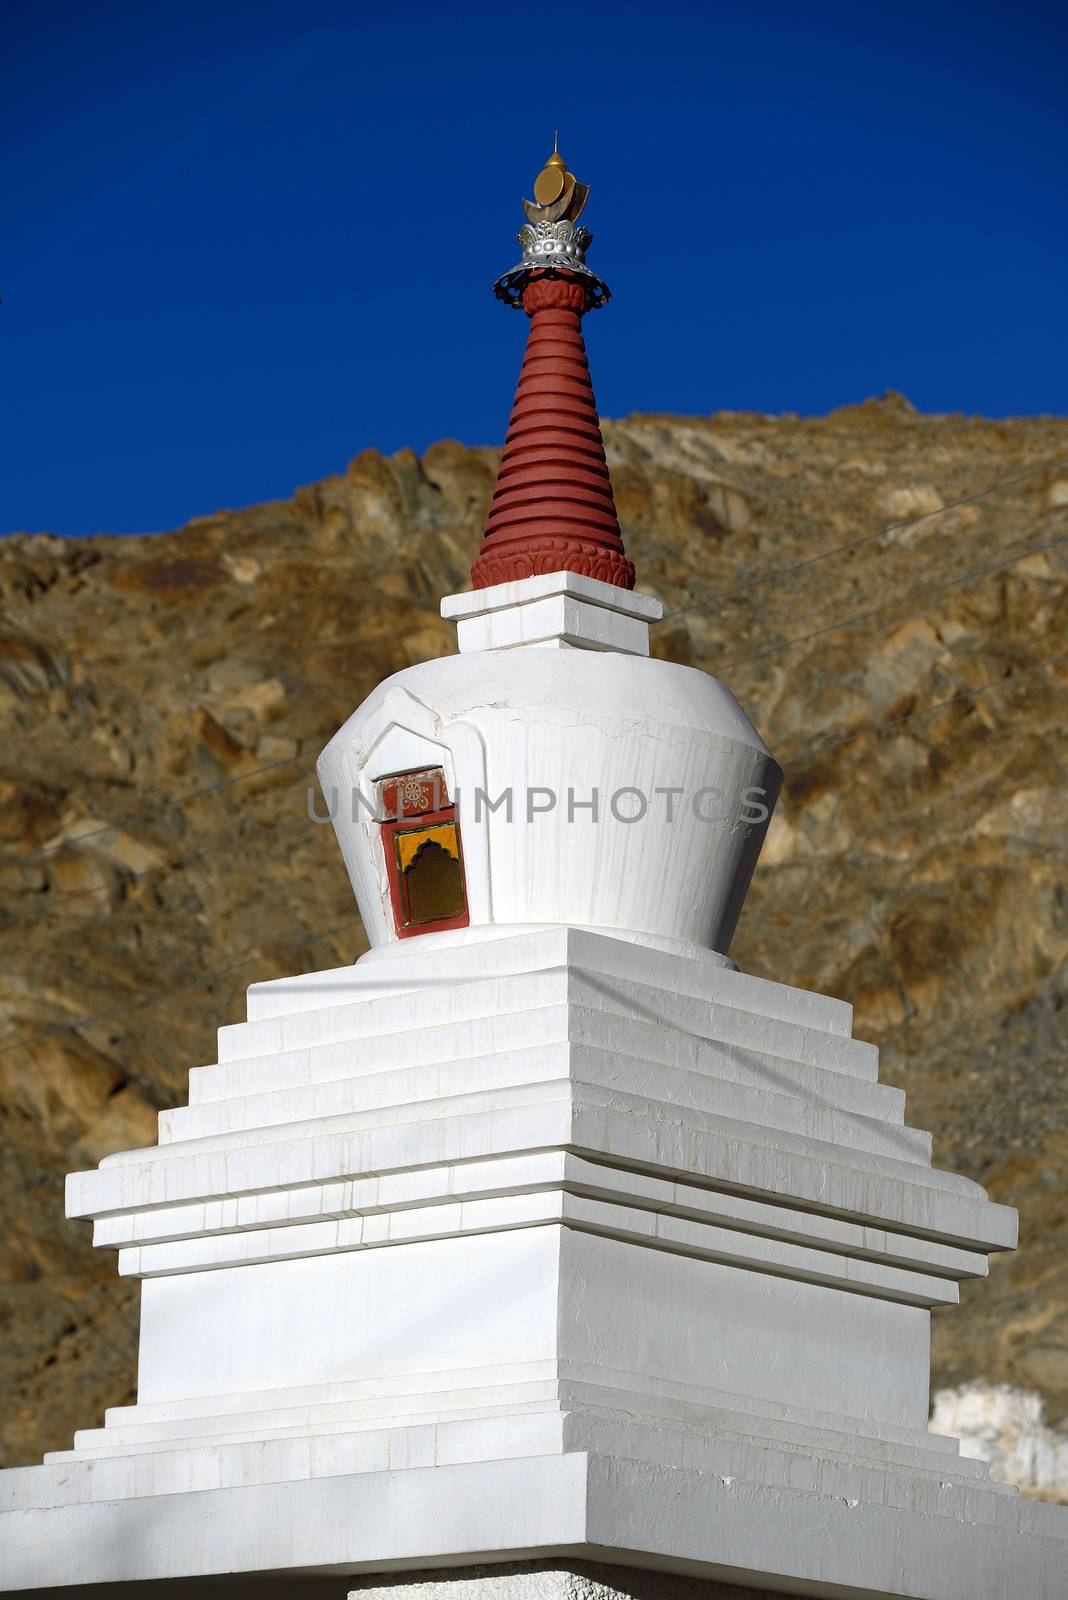 Gompa near a Buddhist monastery. Ladakh province. India